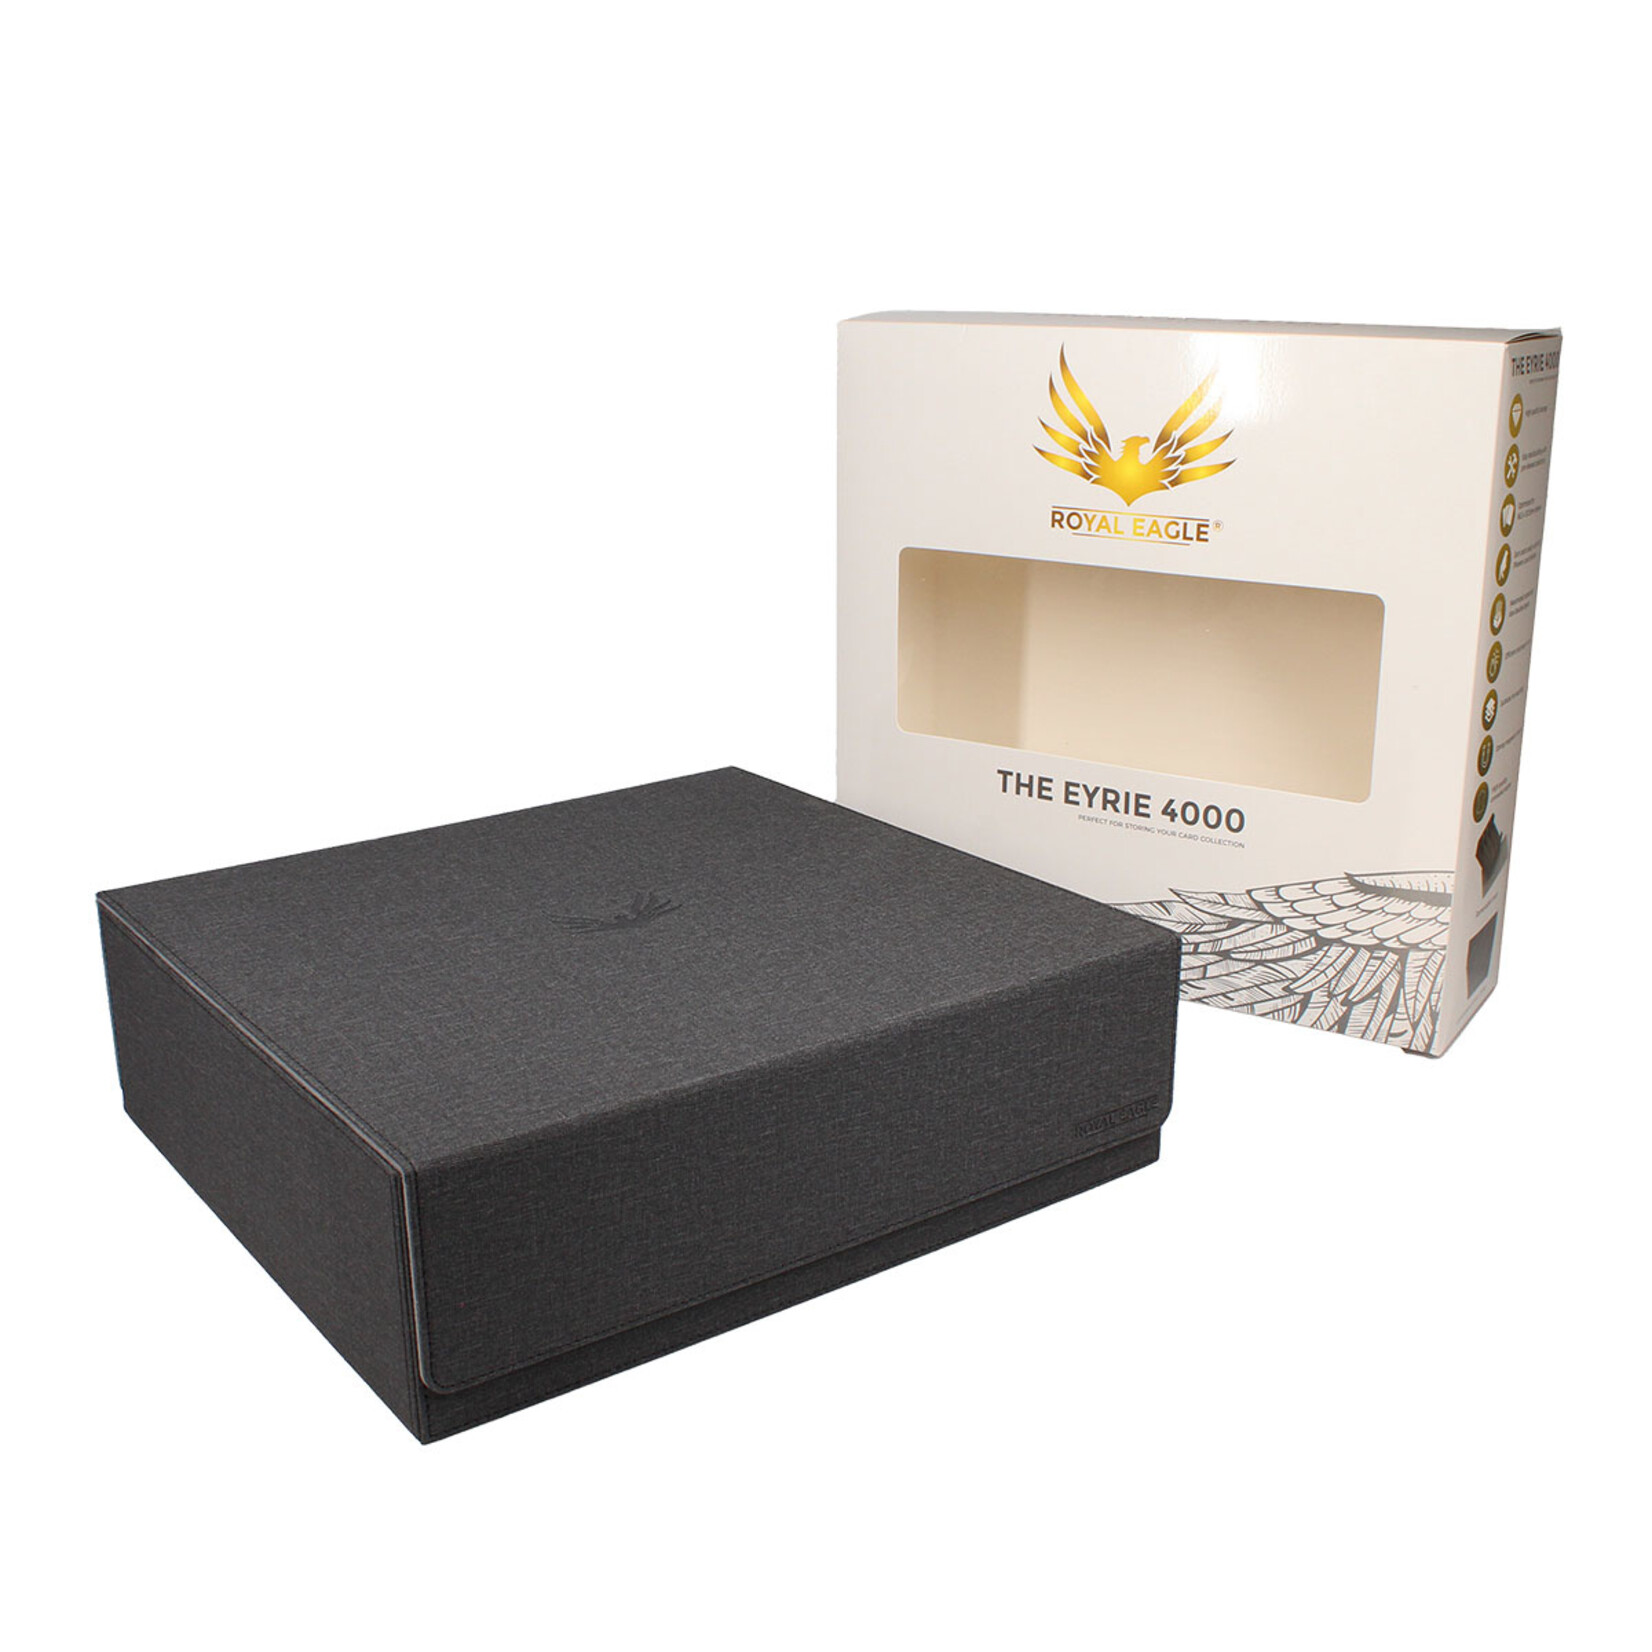 Royal Eagle The Eyrie 4000 Card Storage Box: Fabric Skin